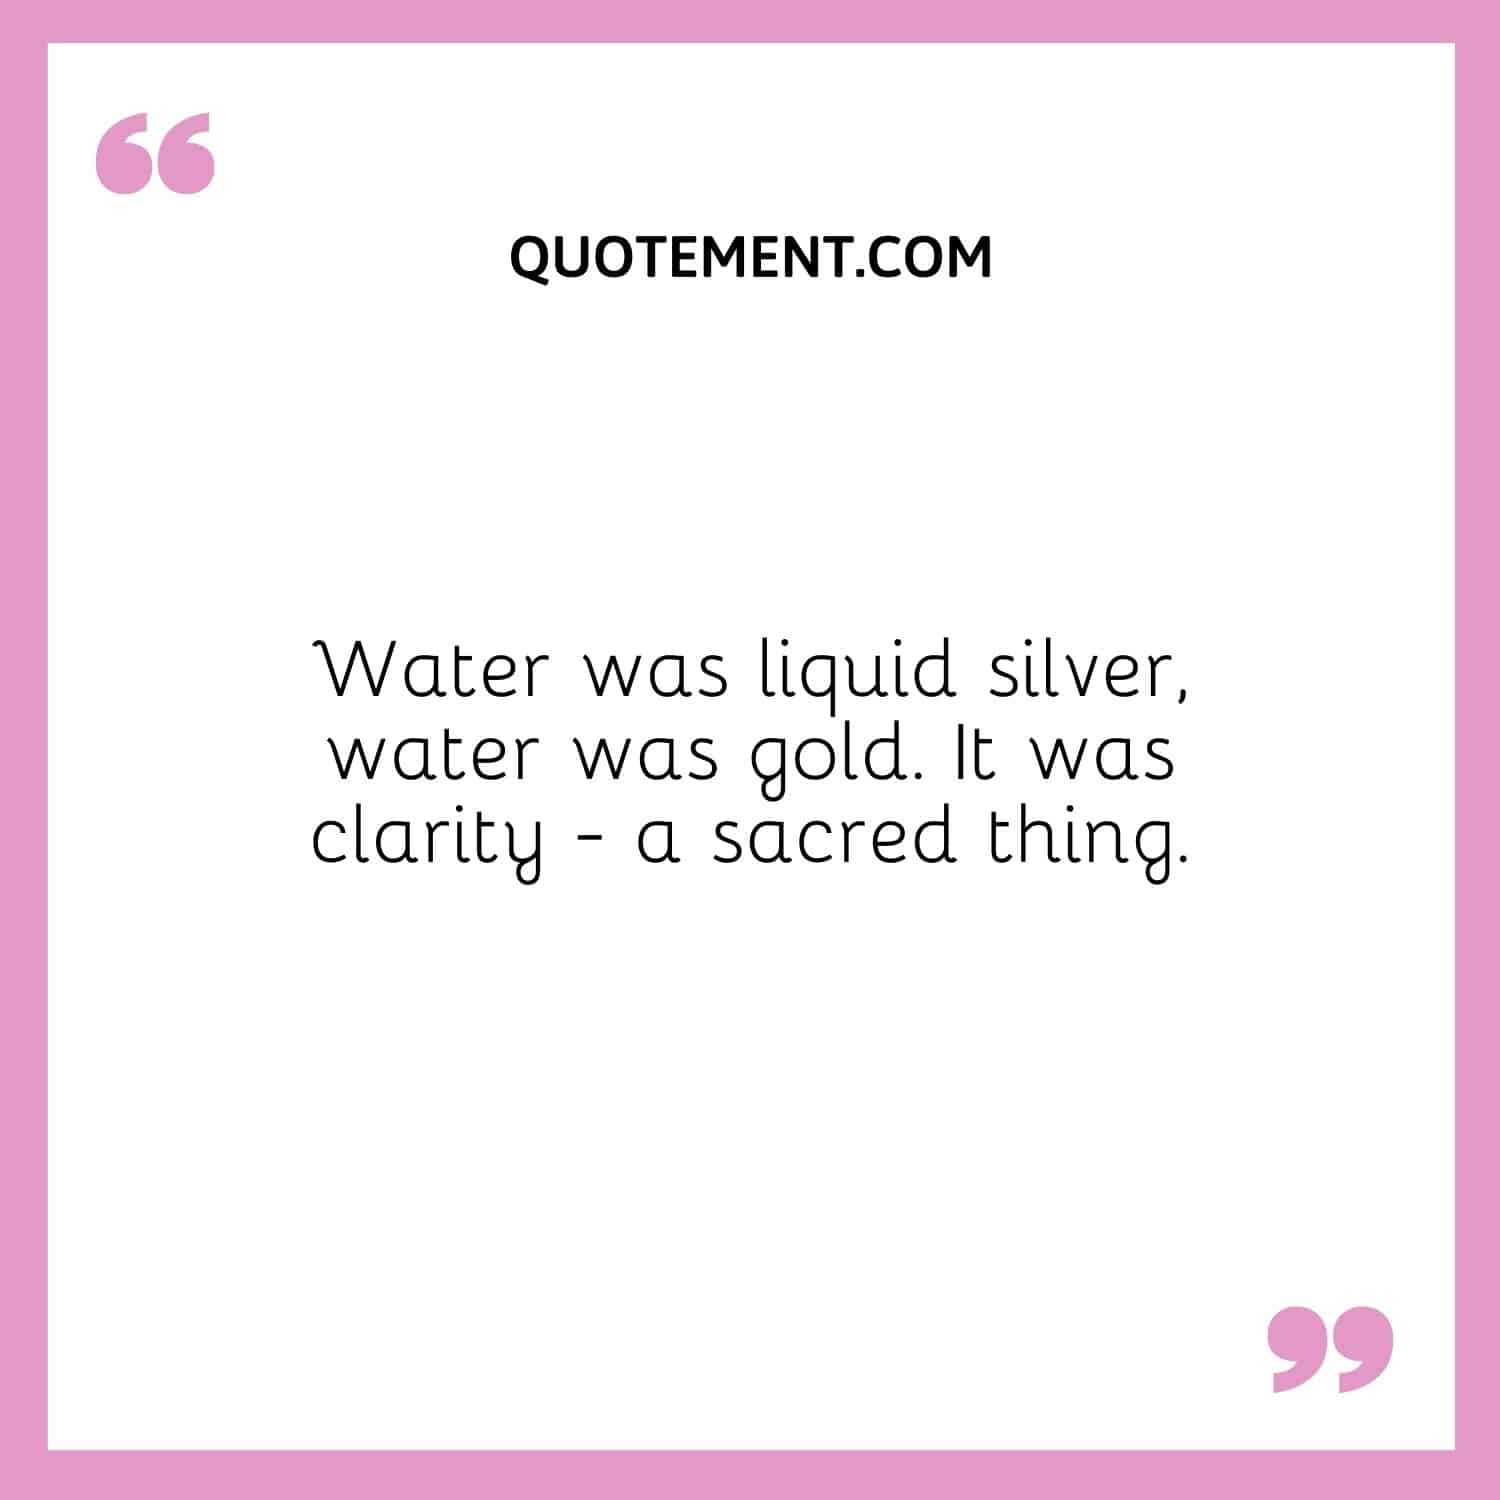 Water was liquid silver